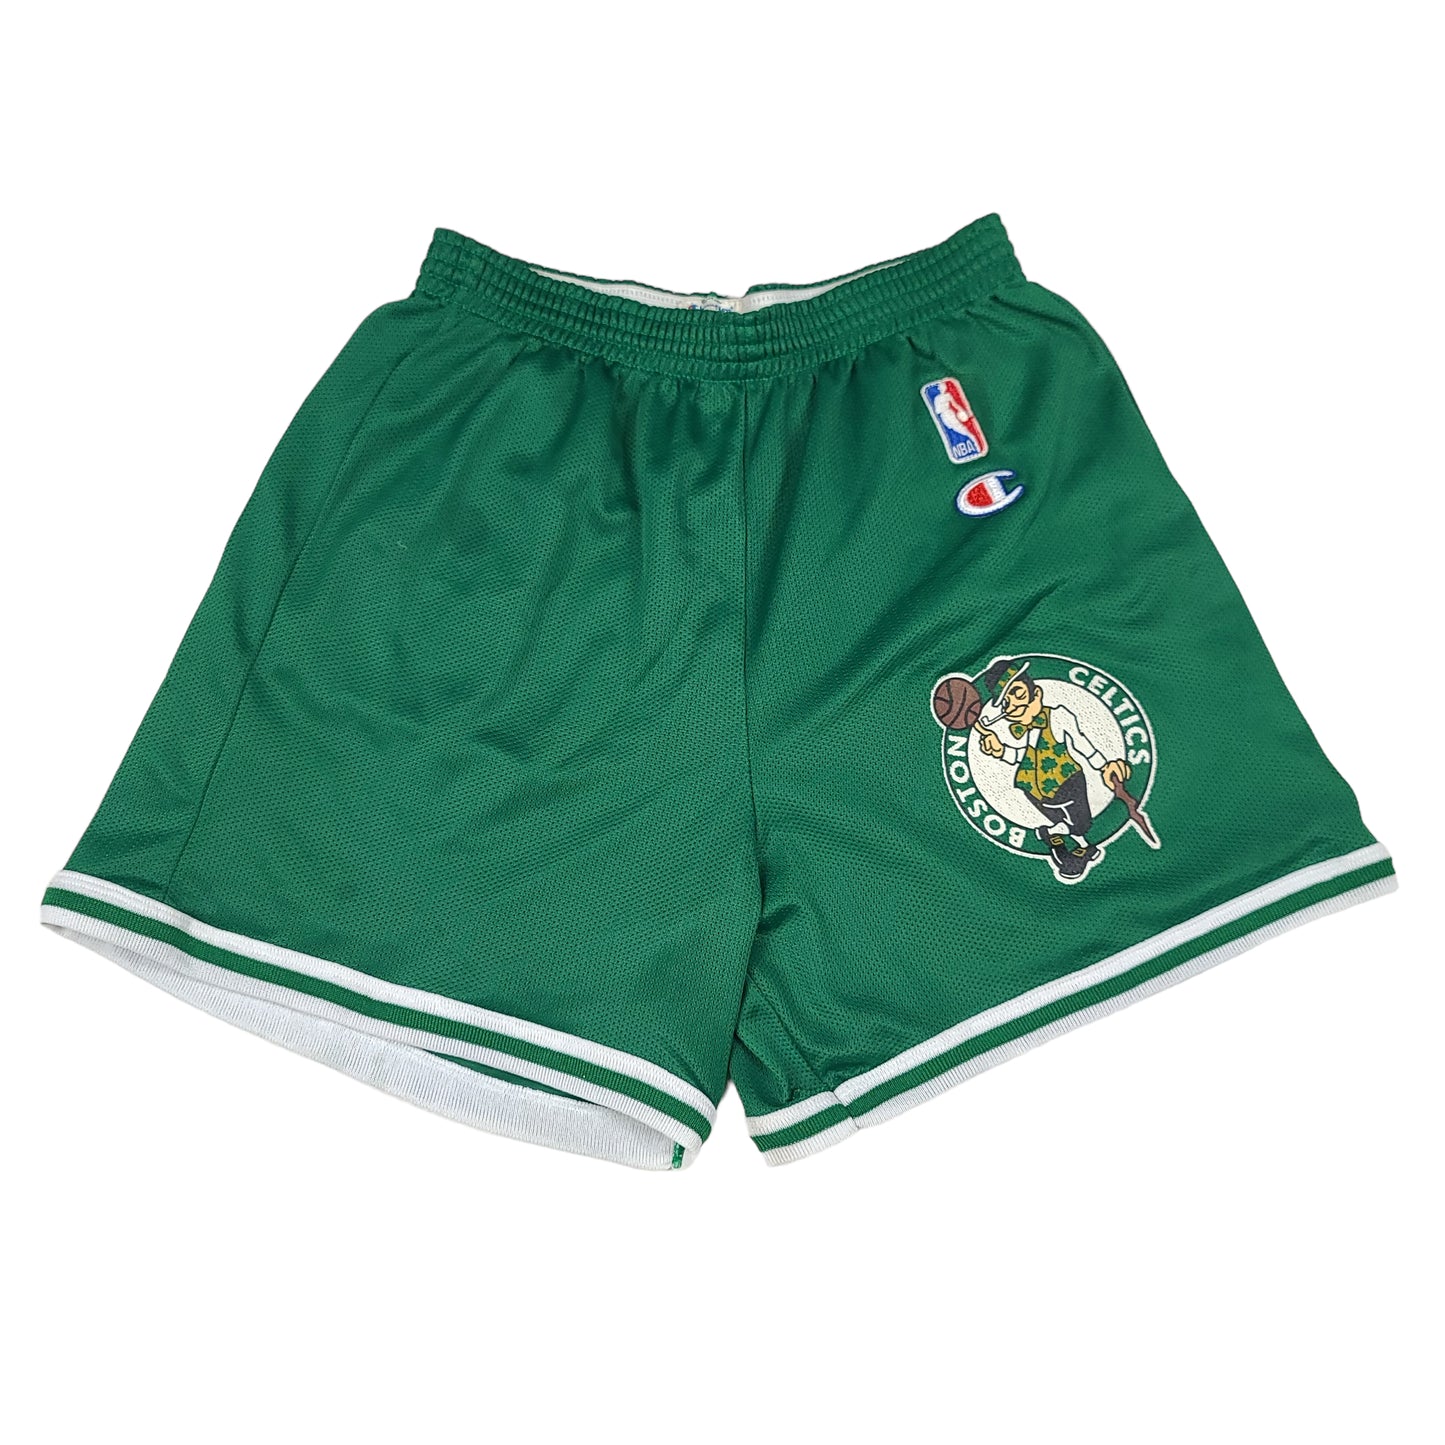 Vintage Boston Celtics Green Champion Youth Basketball Shorts